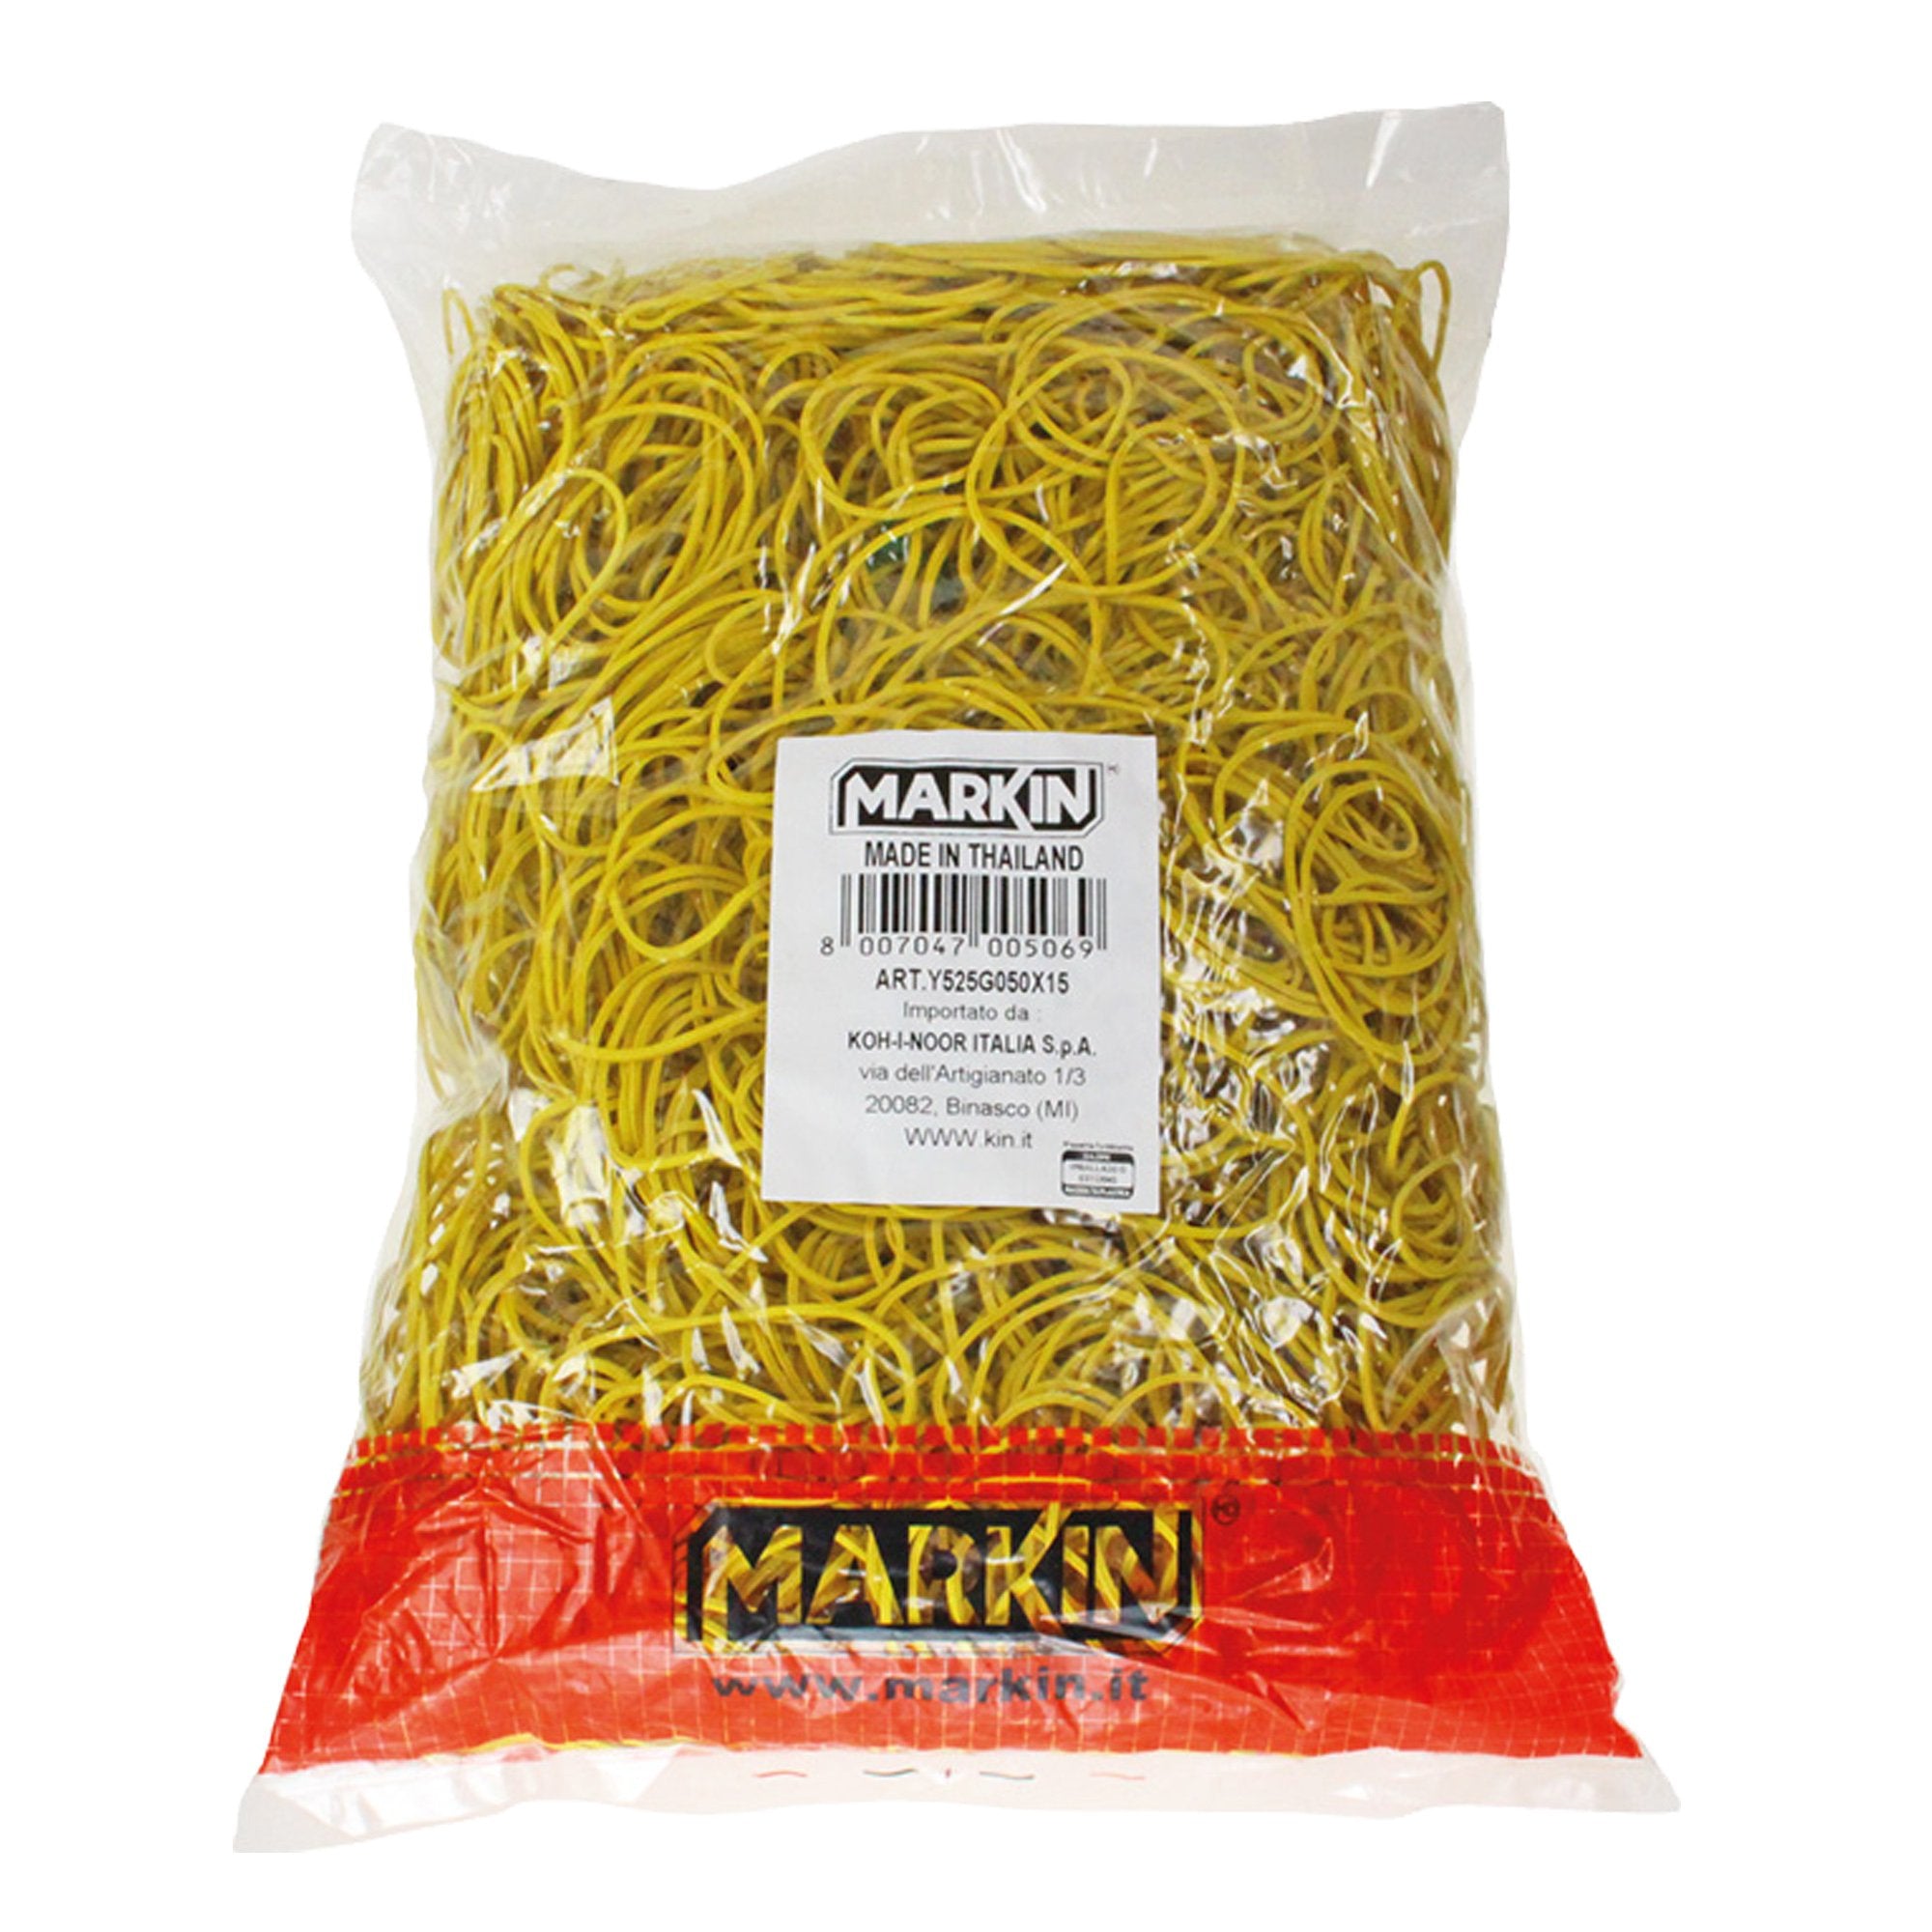 markin-elastico-gomma-giallo-d30-sacco-1kg